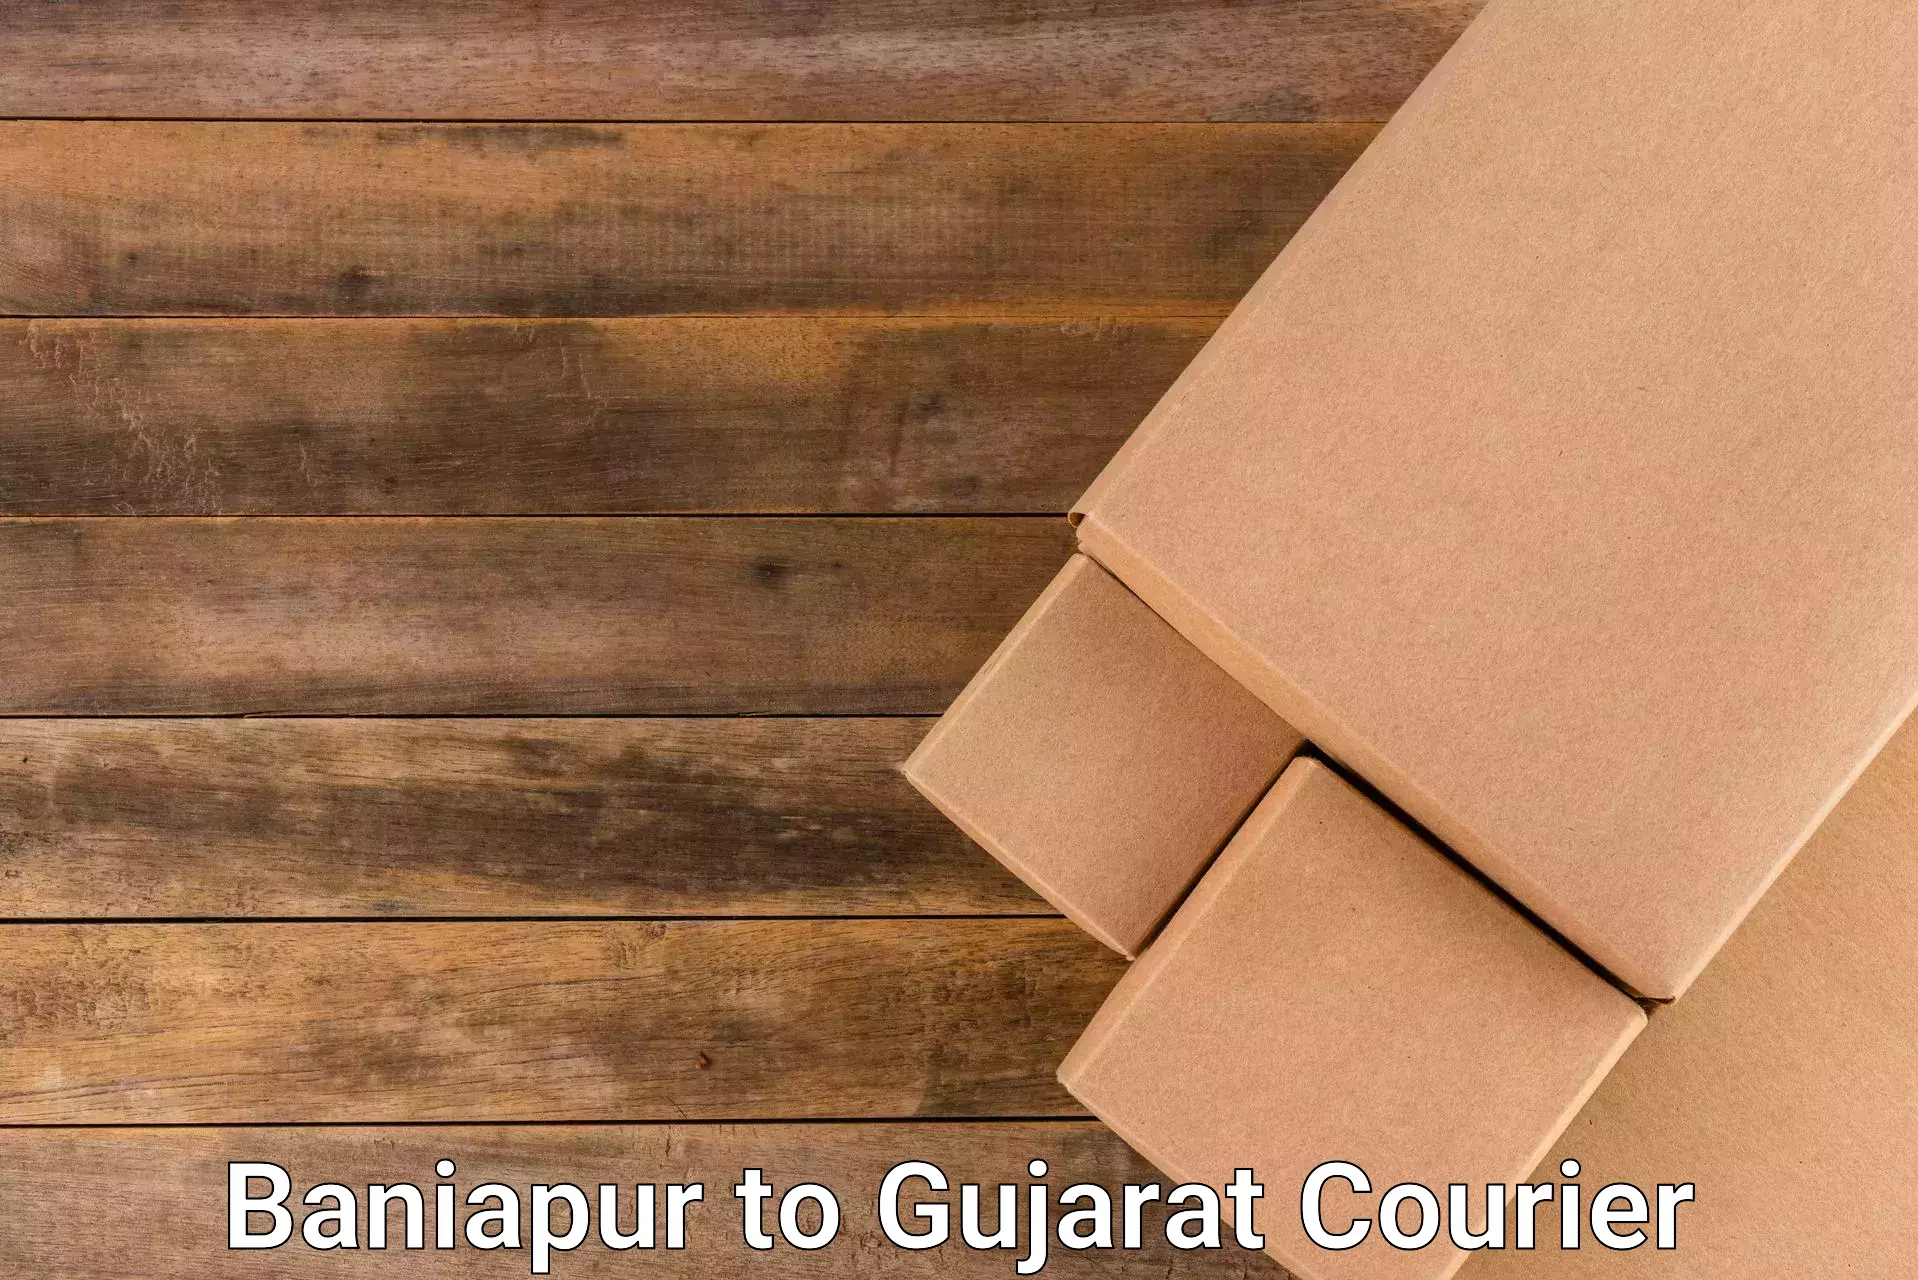 Advanced courier platforms Baniapur to Rapar